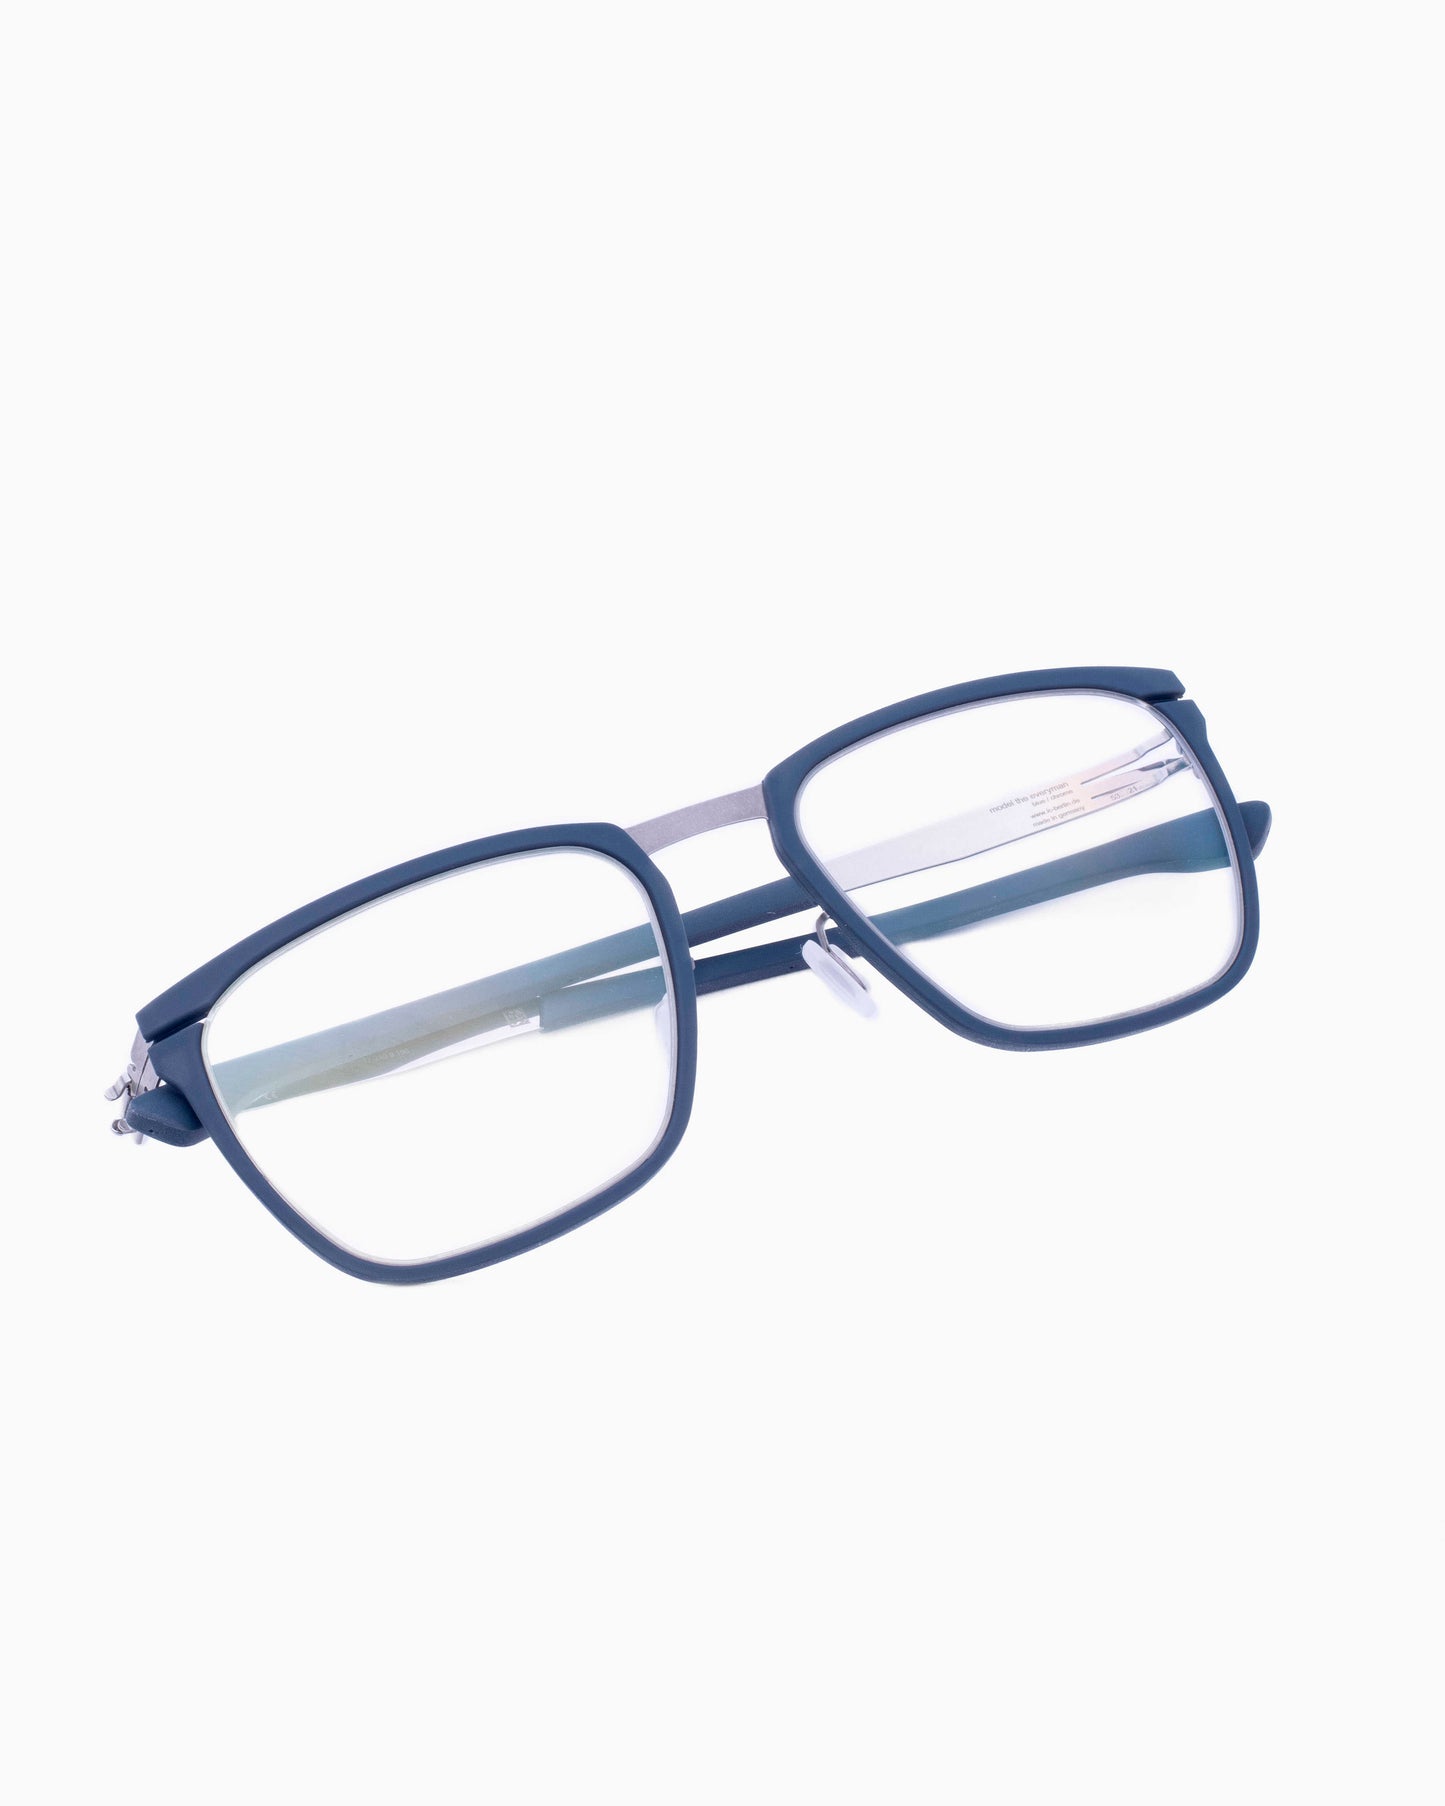 Ic Berlin - theeveryman - chrome-blue | glasses bar